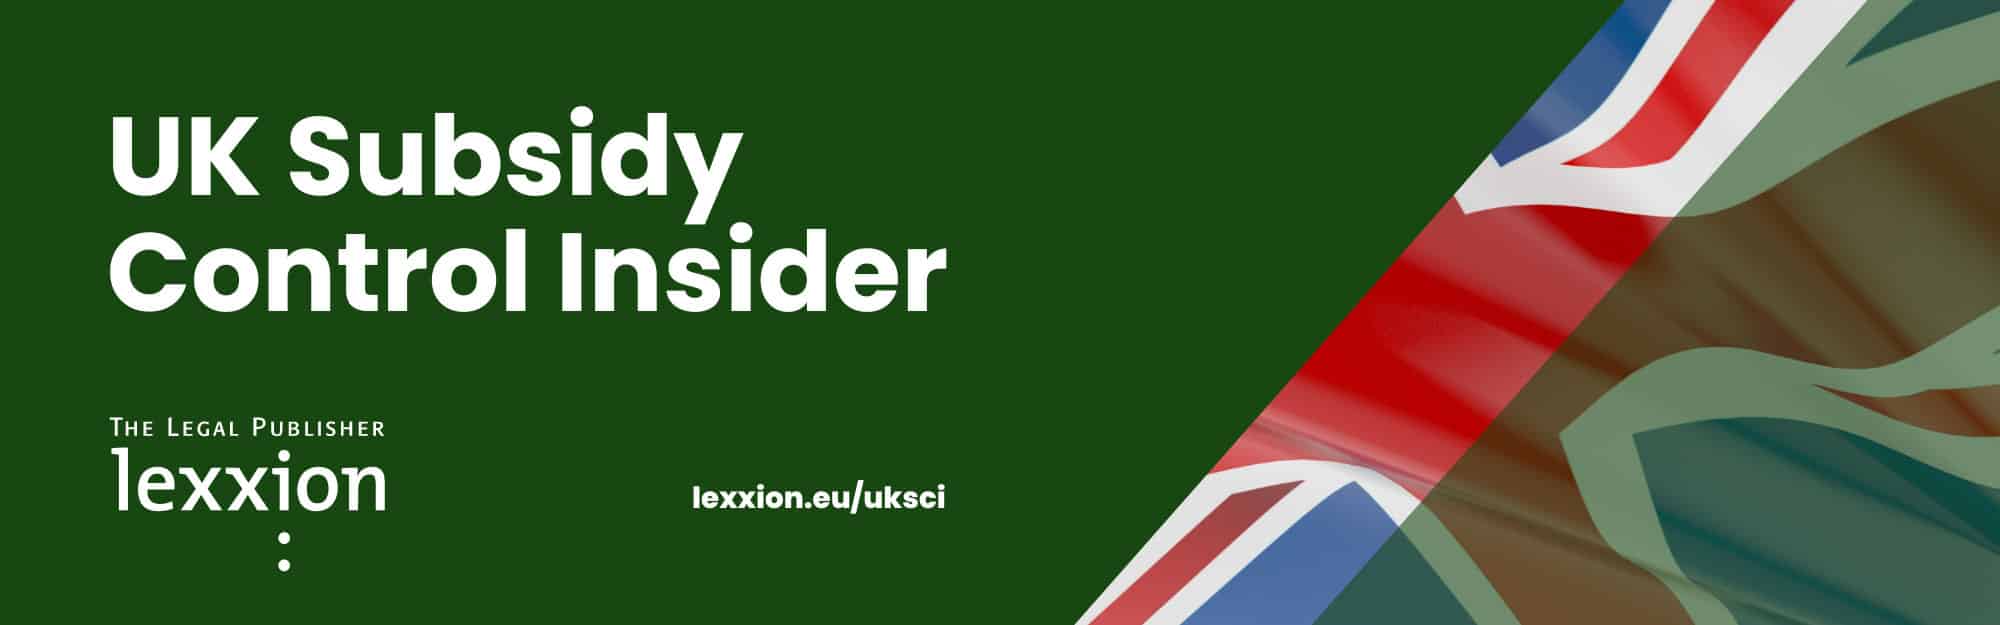 UK Subsidy Control Insider - UK Subsidy Control Insider